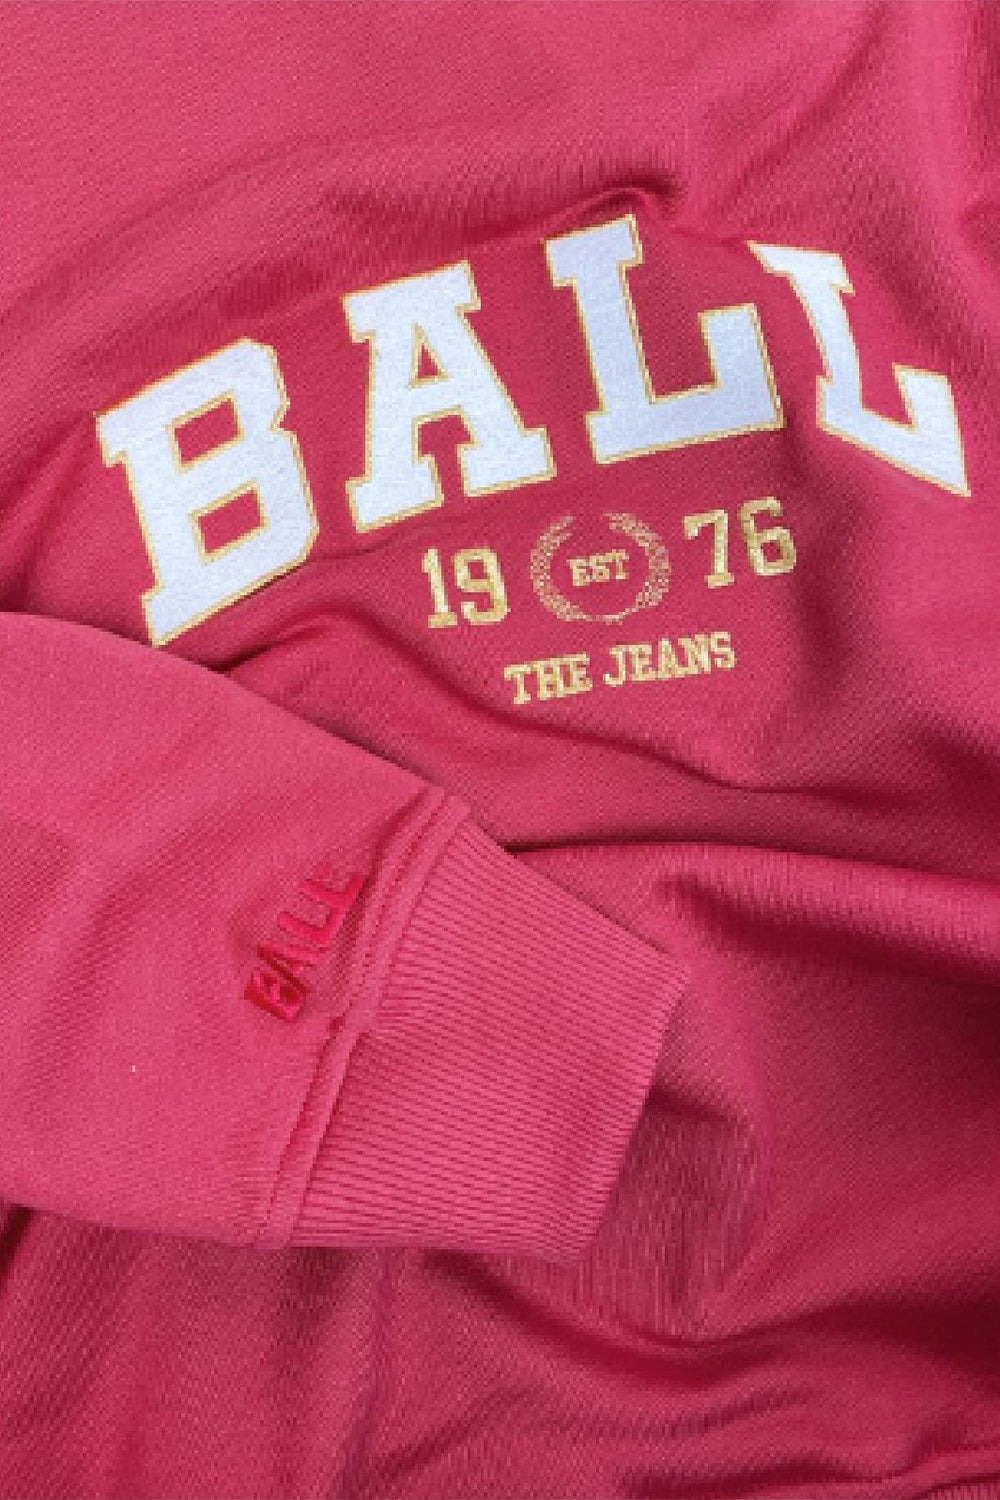 Ball - L. Taylor - Rose Hip Sweatshirts 